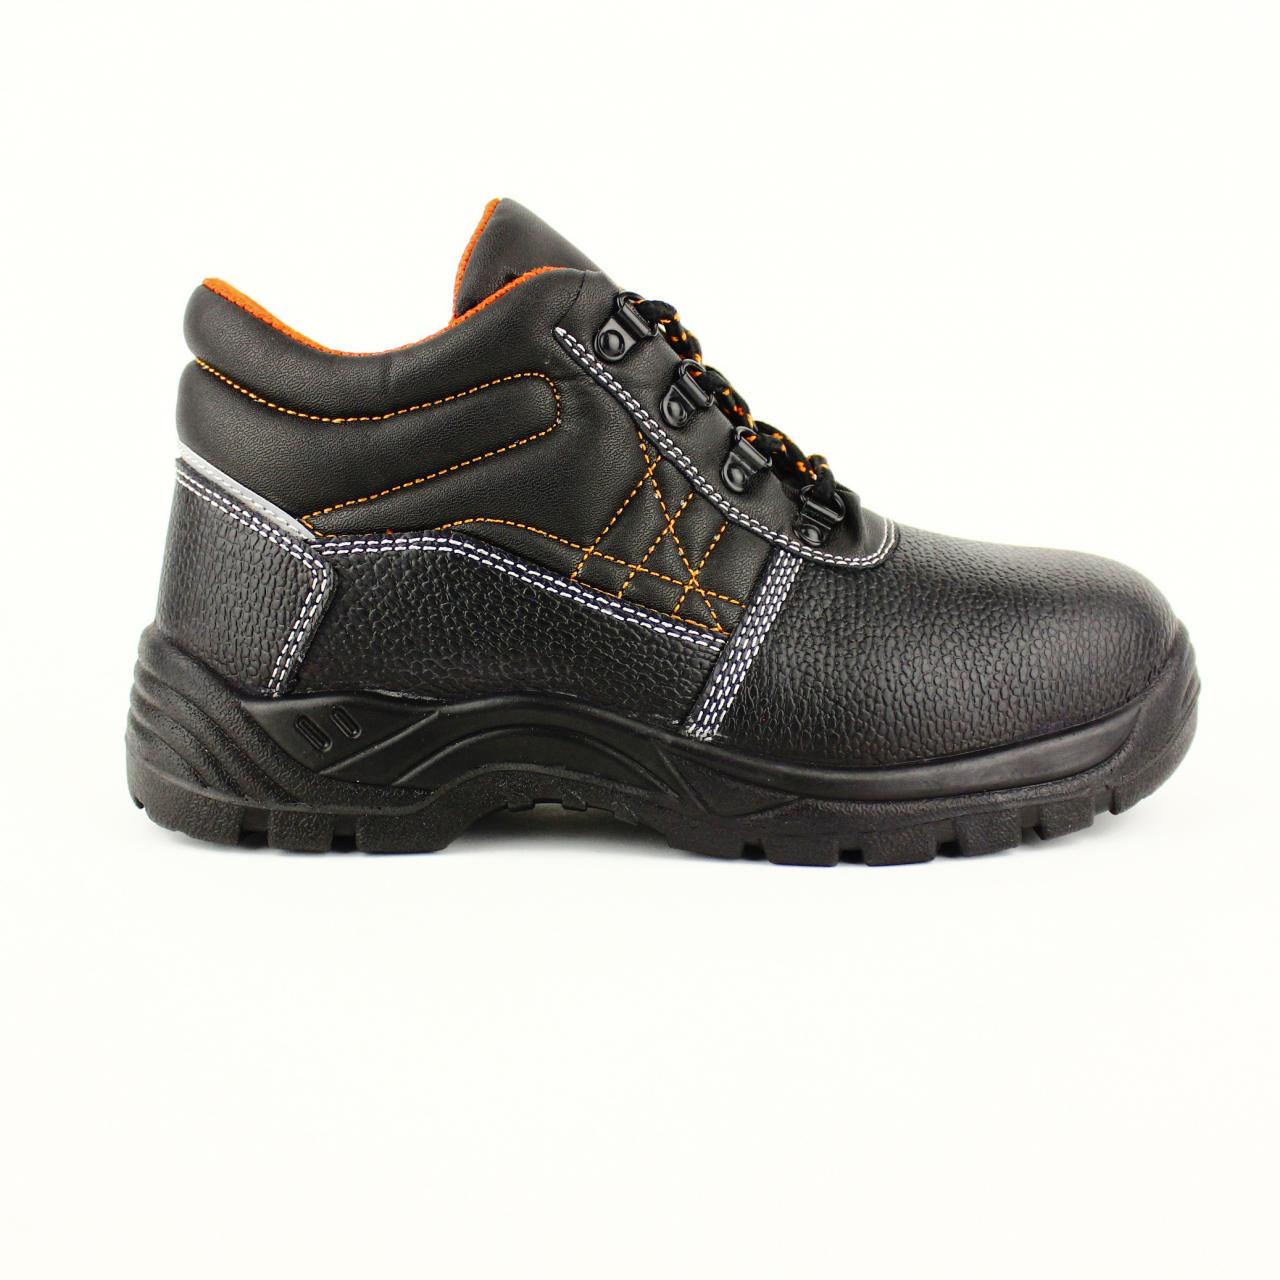 BRIONI O1 high top work shoe - Pharsol Protect - Workwear